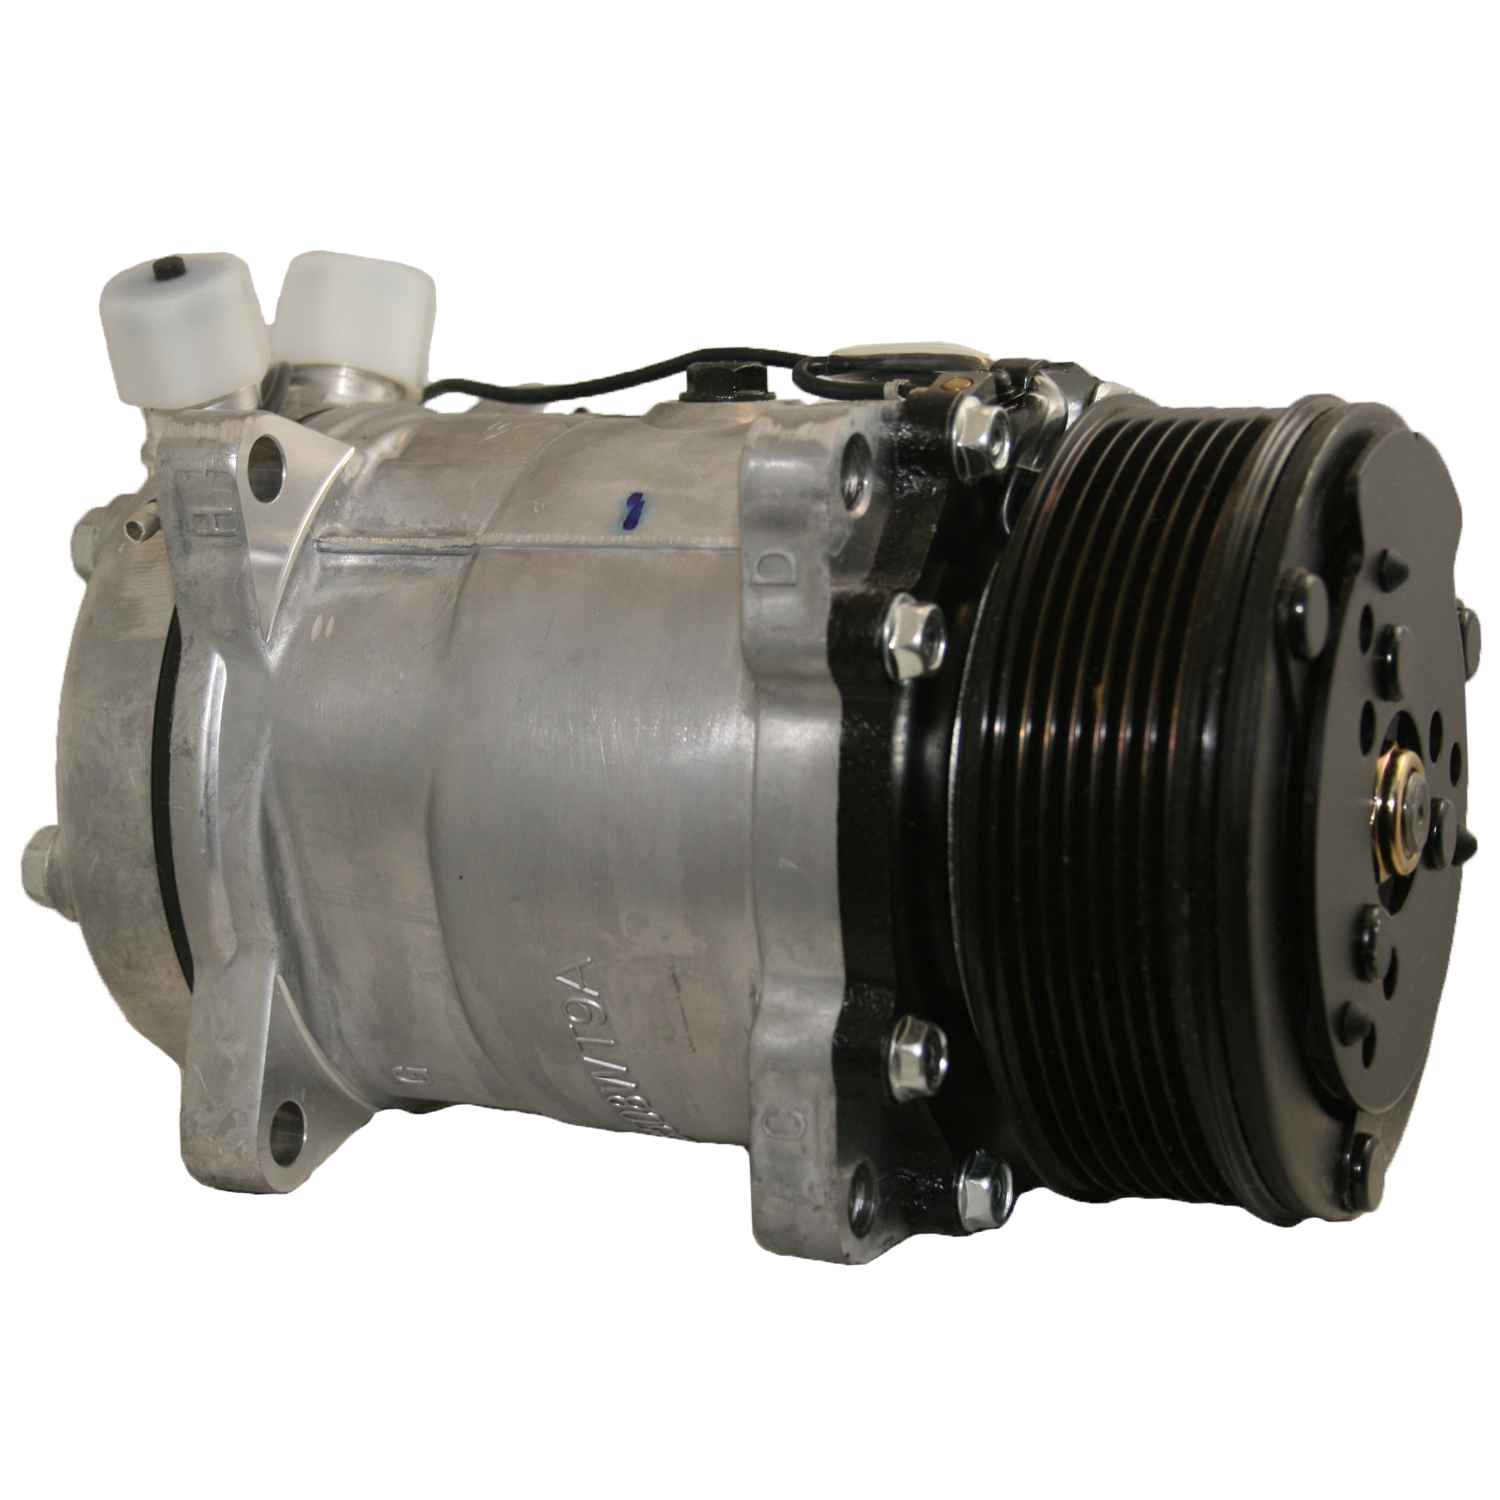 TCW Compressor 40150.701NEW New Product Image field_60b6a13a6e67c